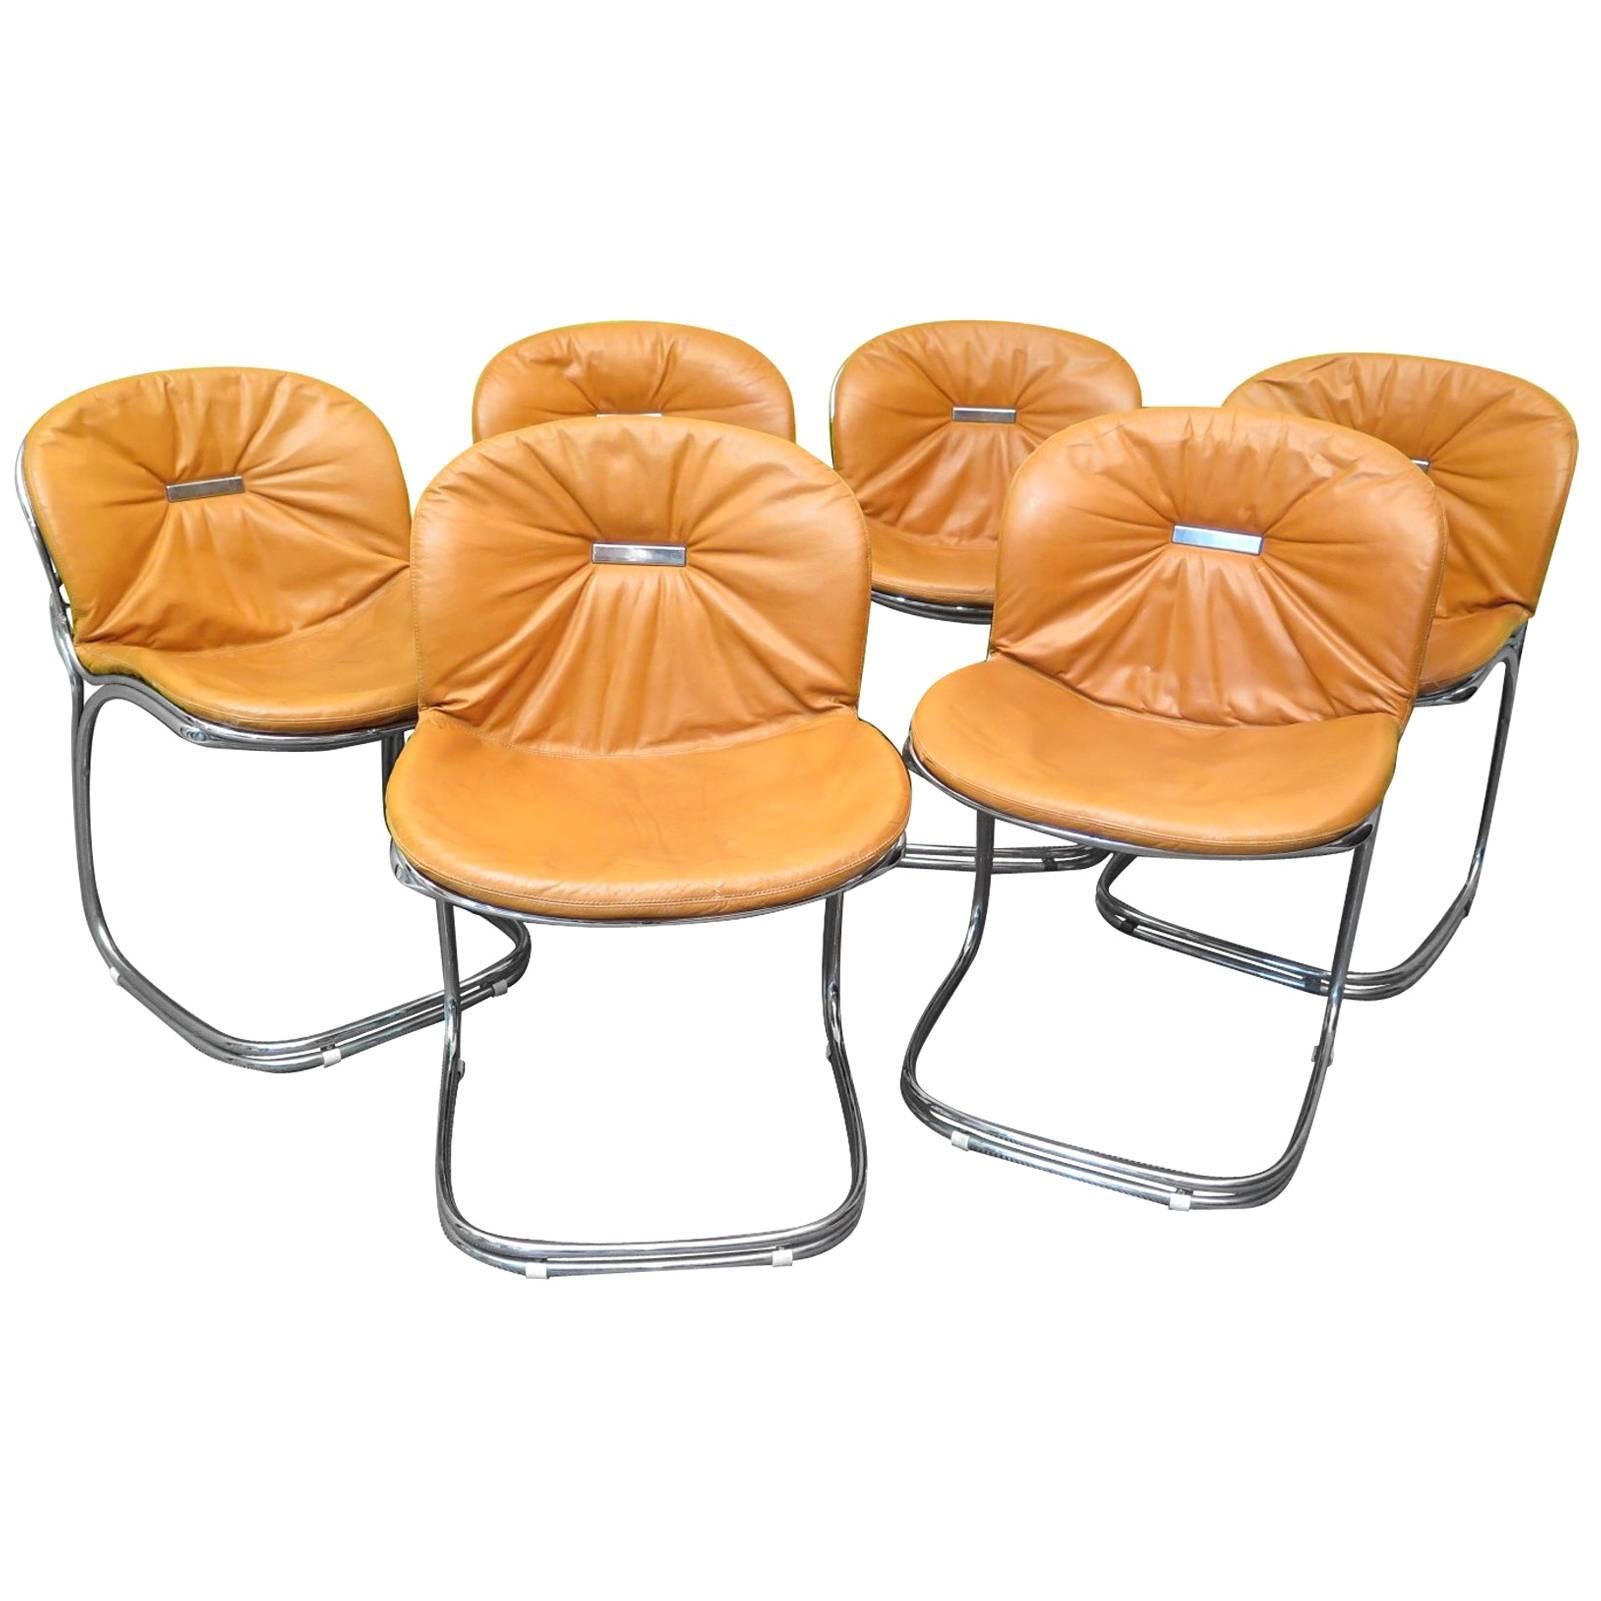 Six by Gastone Rinaldi Leather and Tubular Metal Italian Chairs